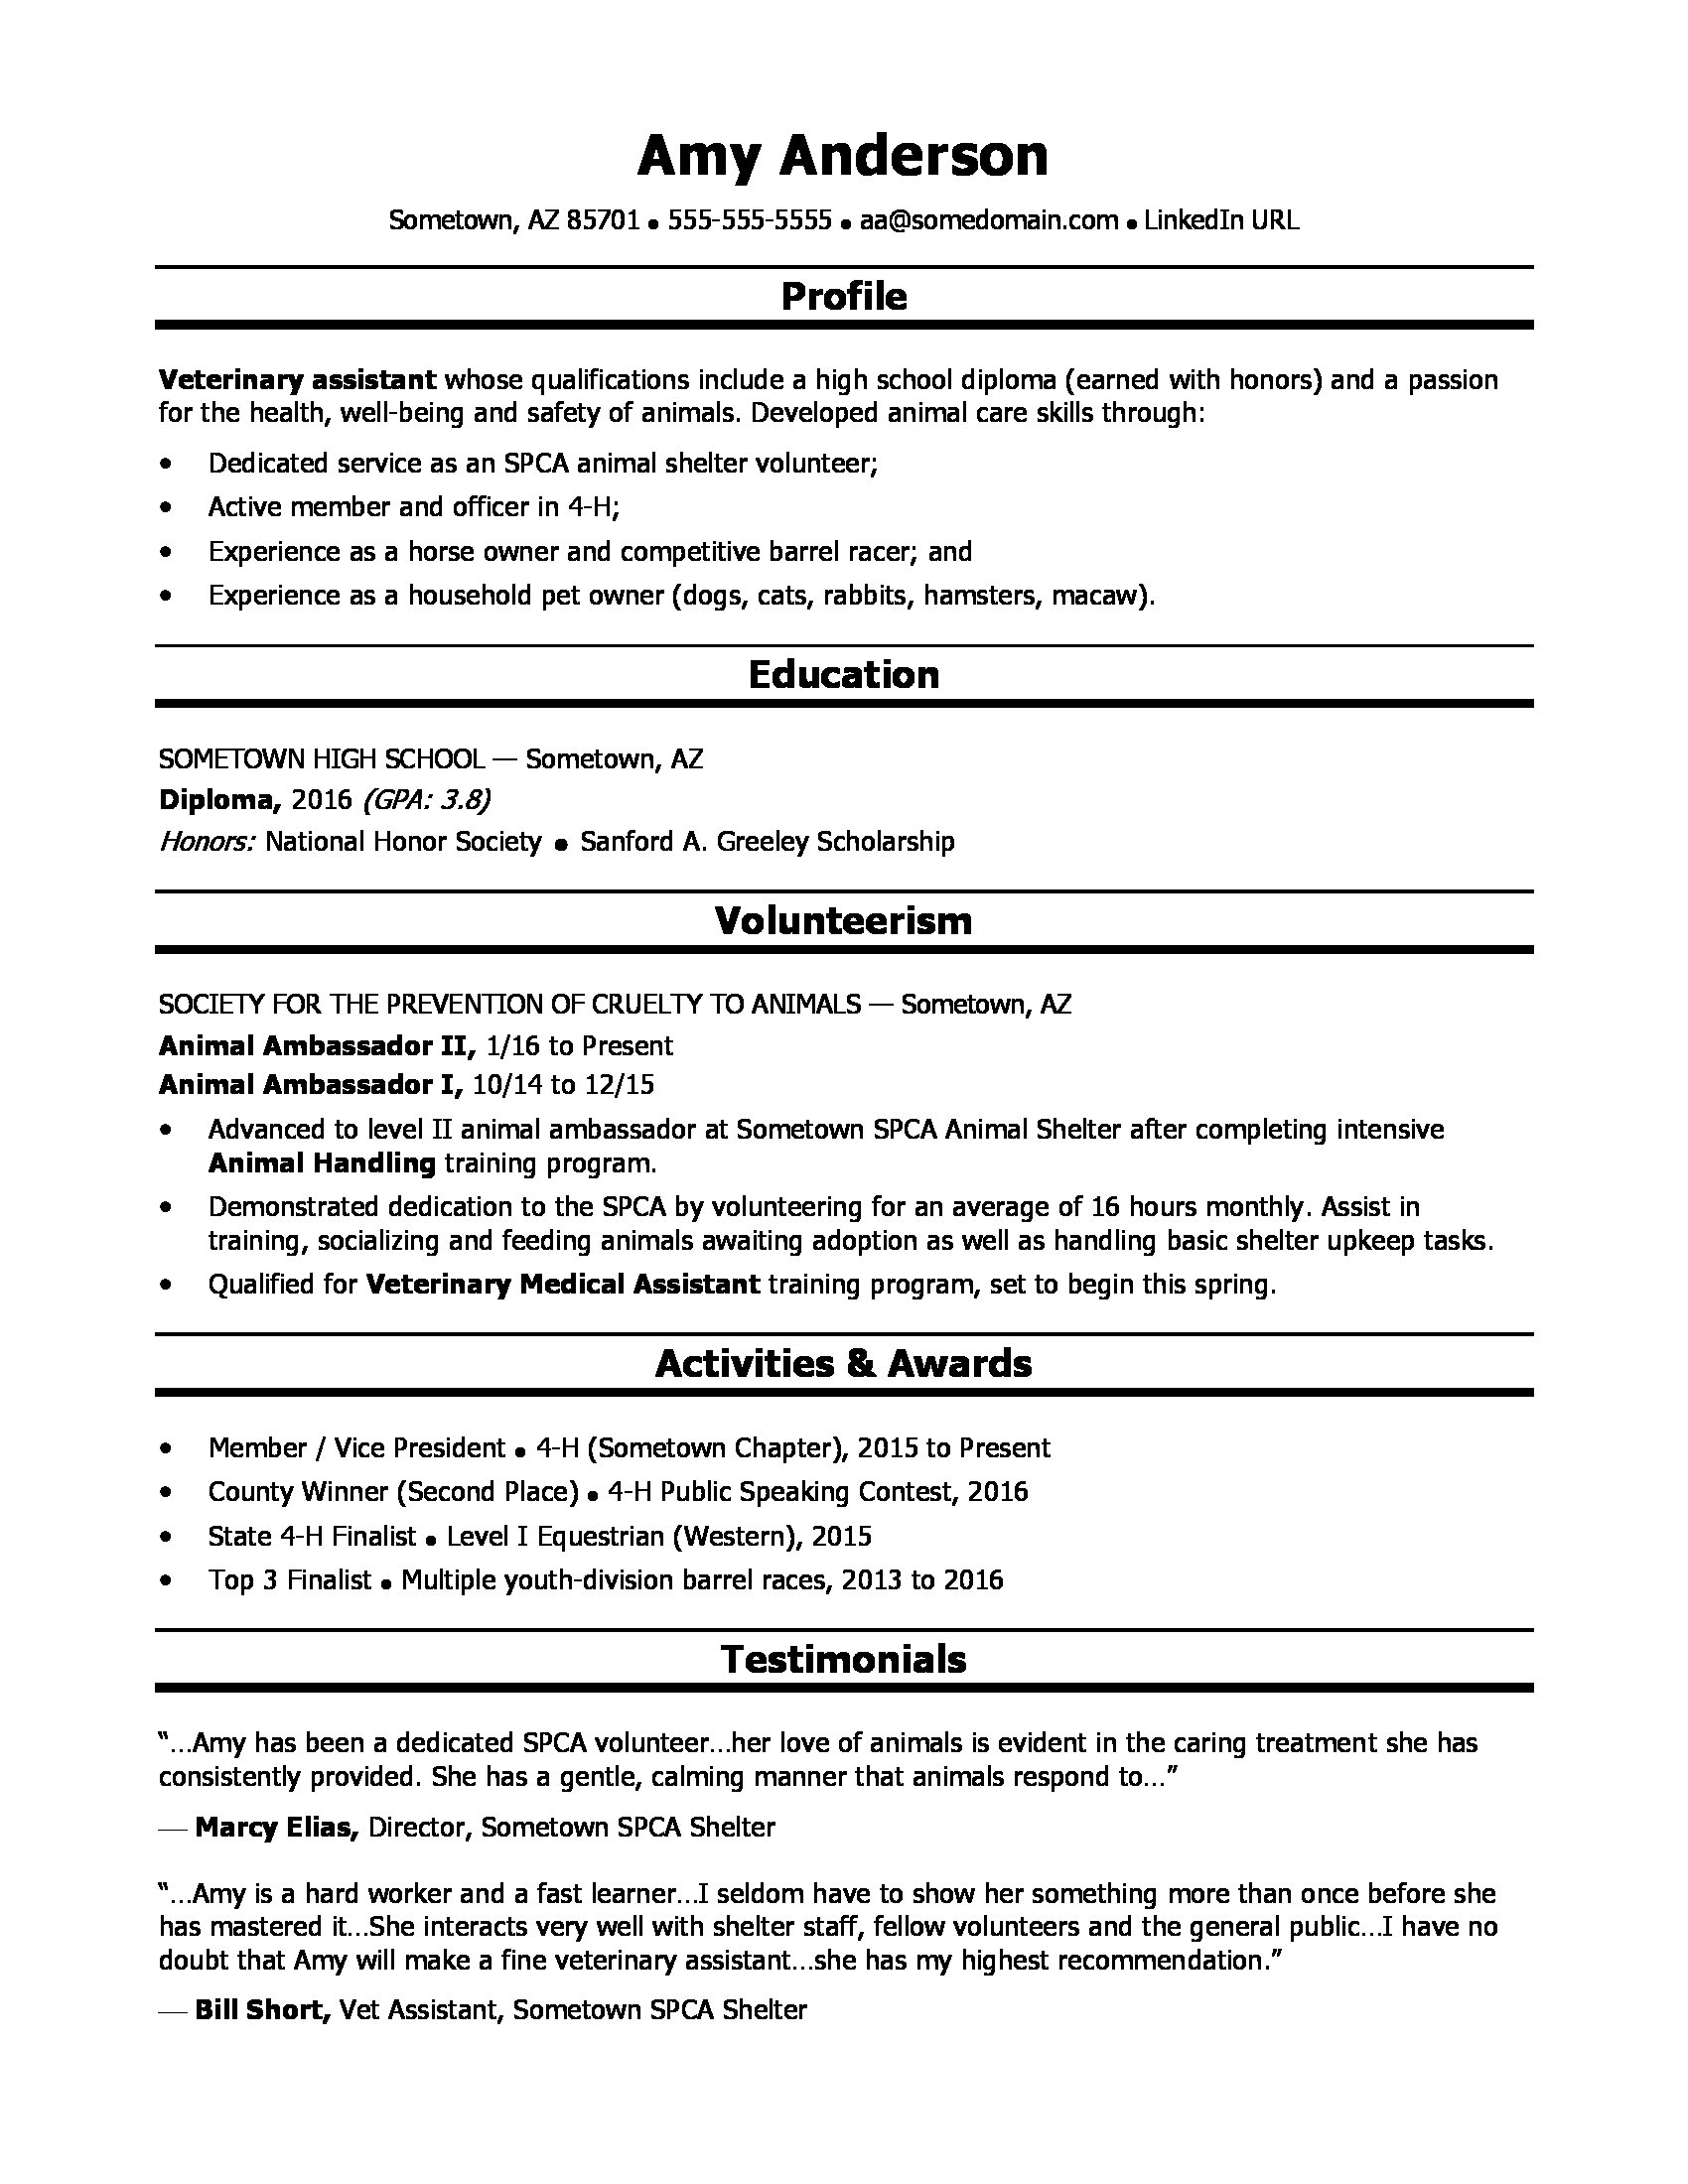 Resume Format High School Graduate 